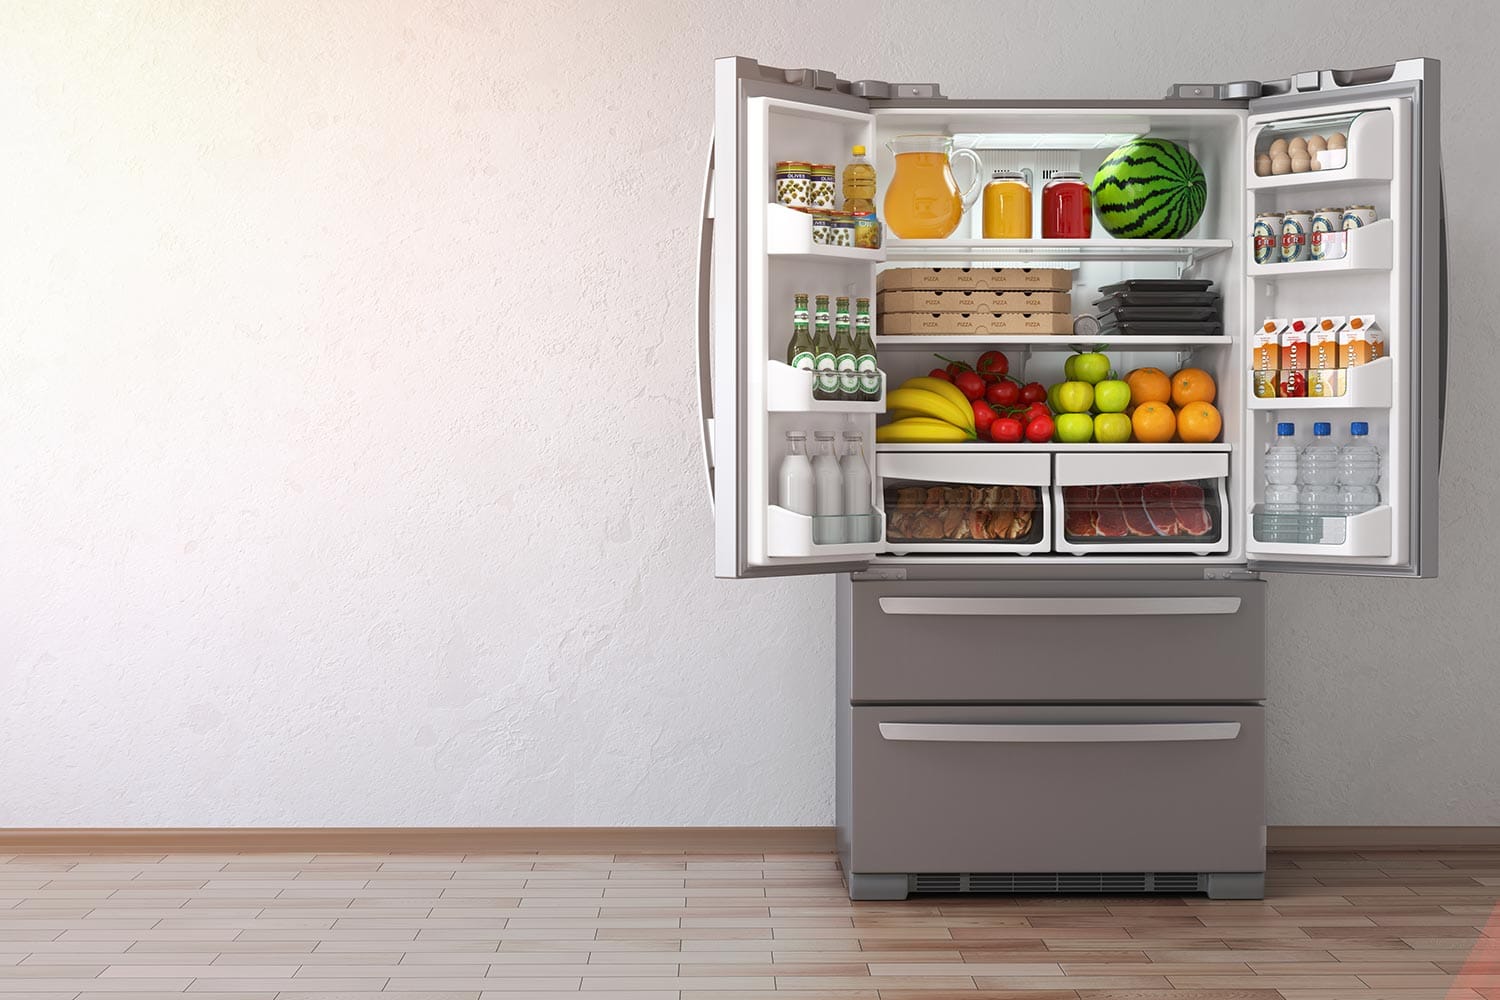 Open fridge refrigerator full of food in the empty kitchen